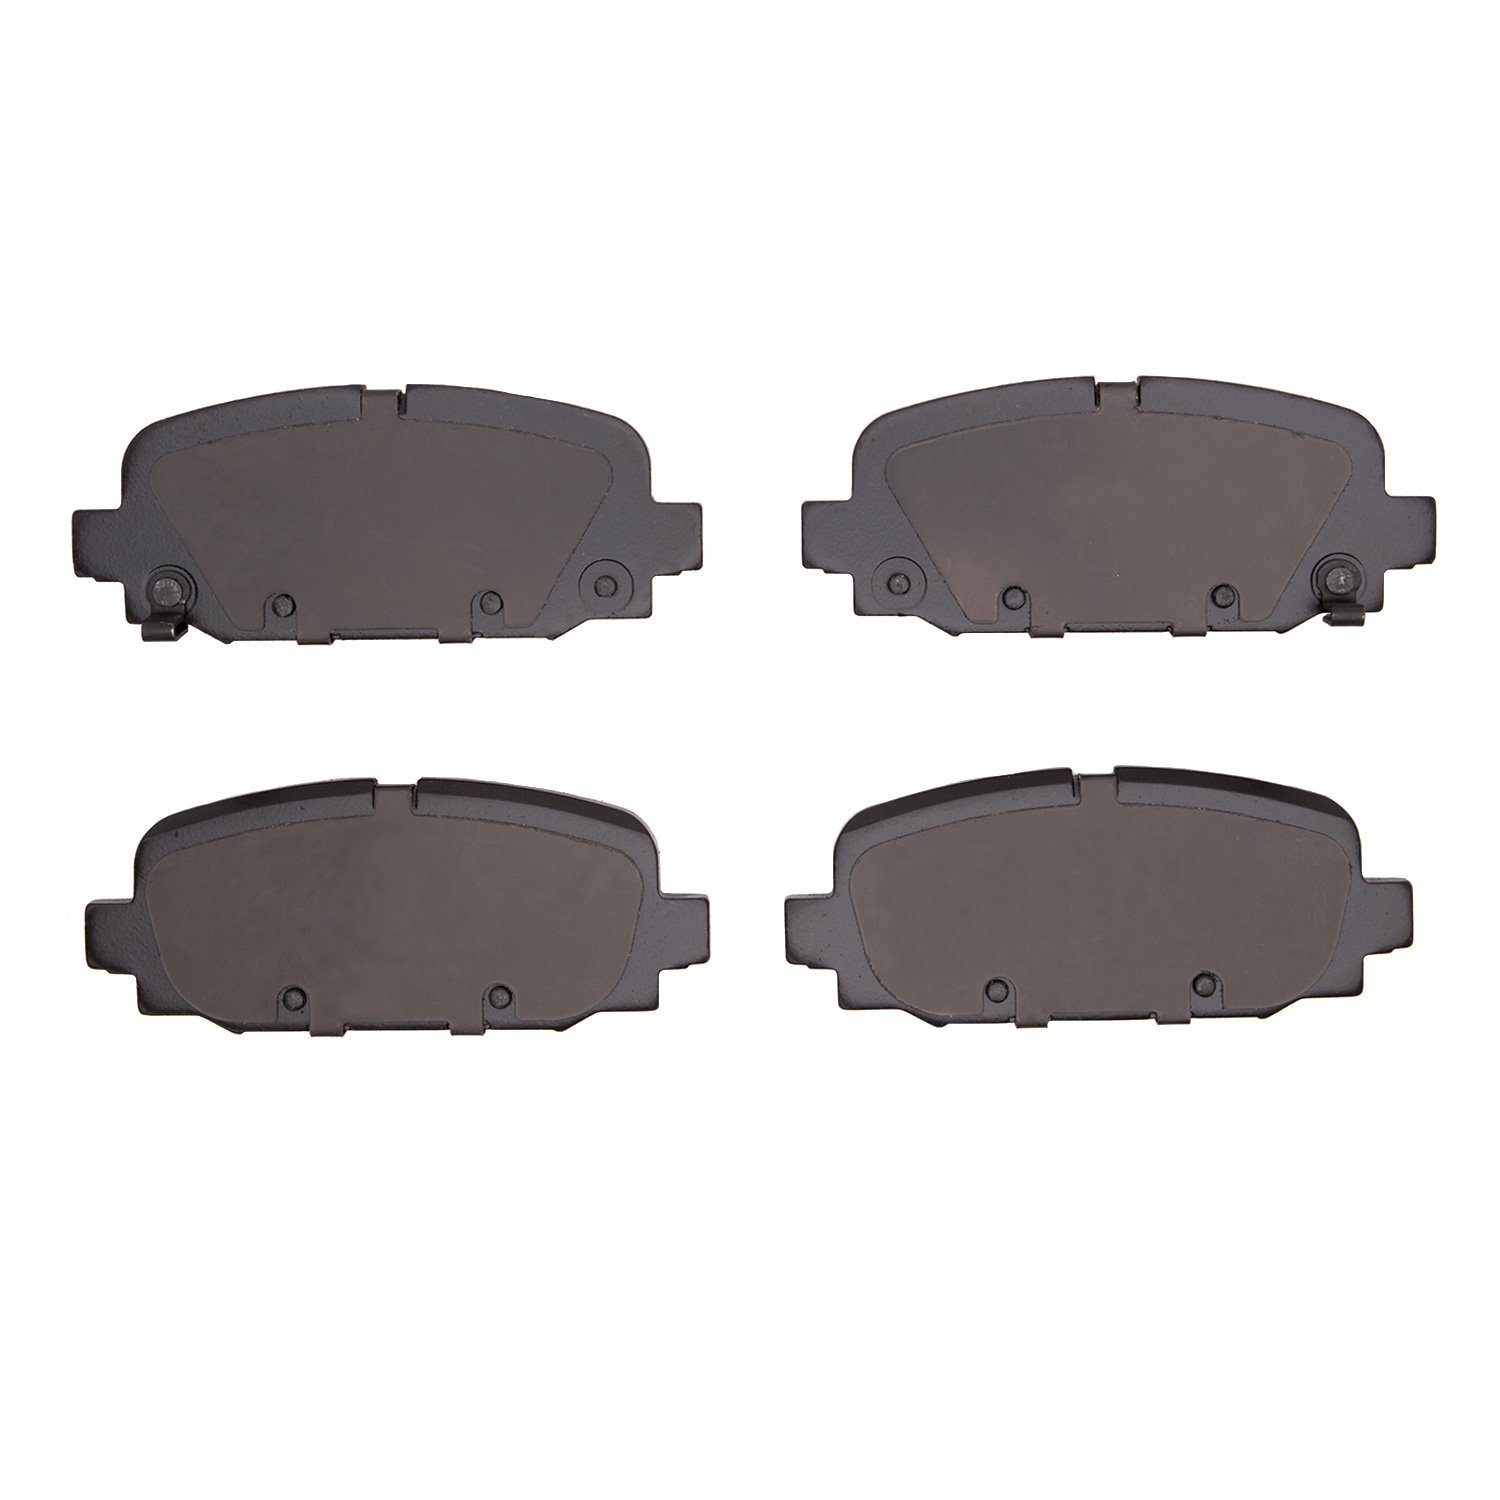 1551-2081-00 5000 Advanced Ceramic Brake Pads, Fits Select Mopar, Position: Rear